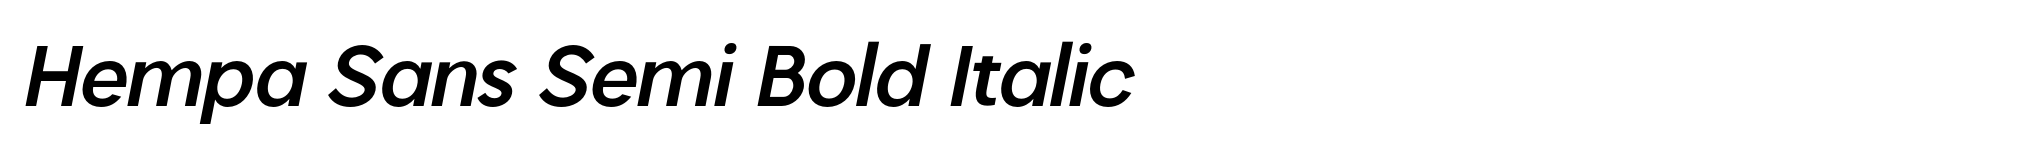 Hempa Sans Semi Bold Italic image